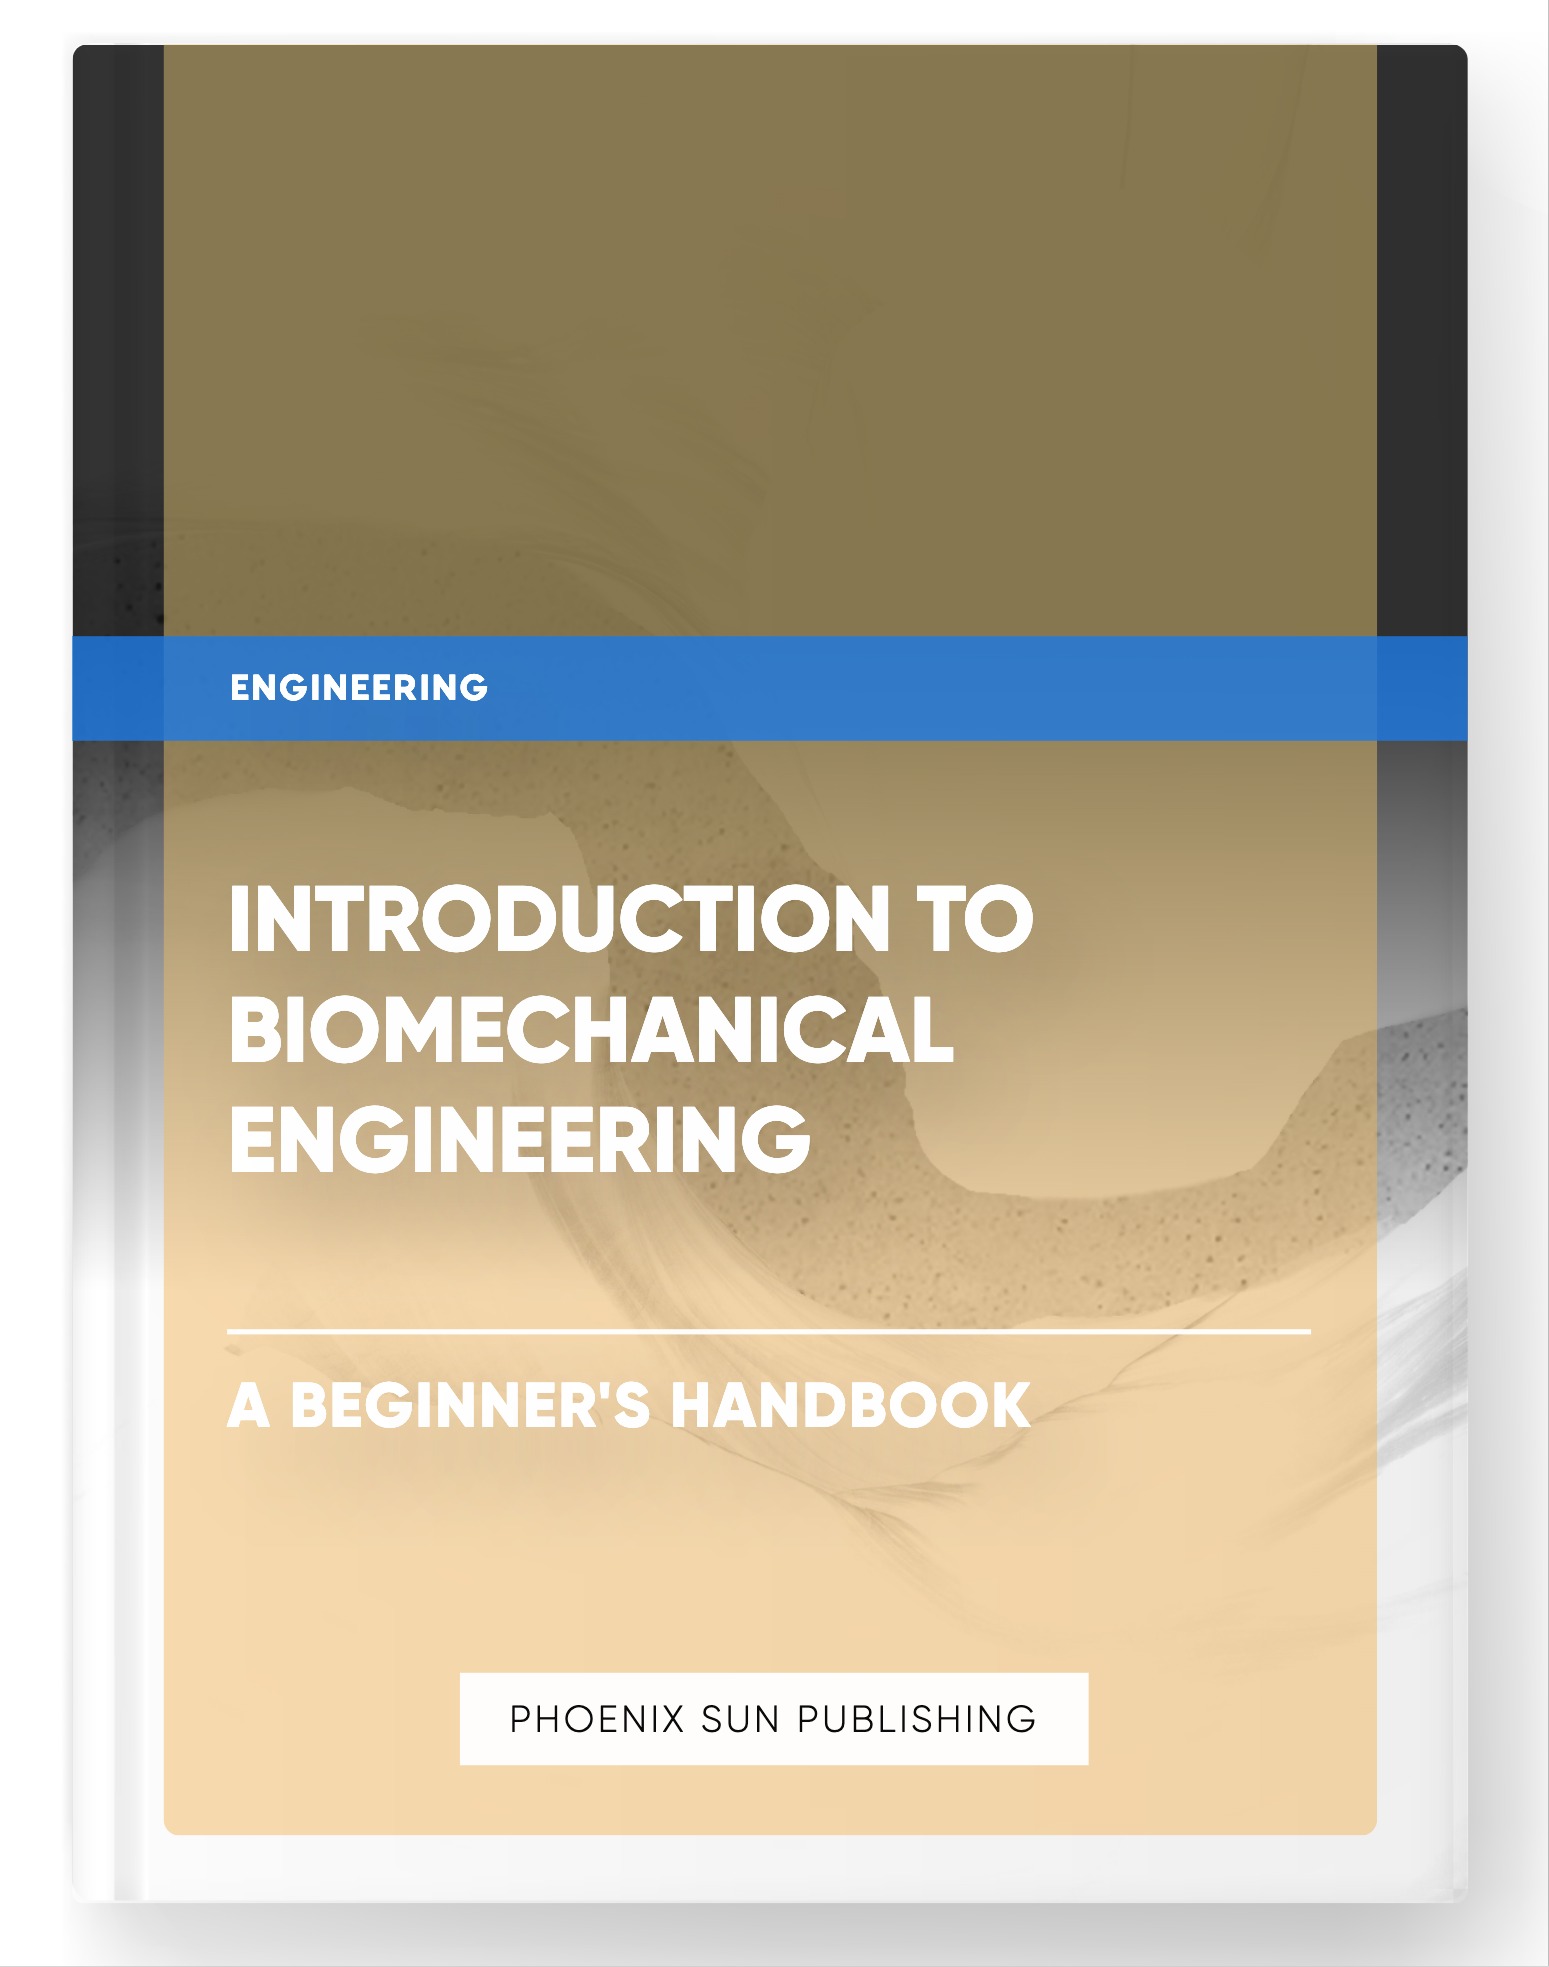 Introduction to Biomechanical Engineering – A Beginner’s Handbook